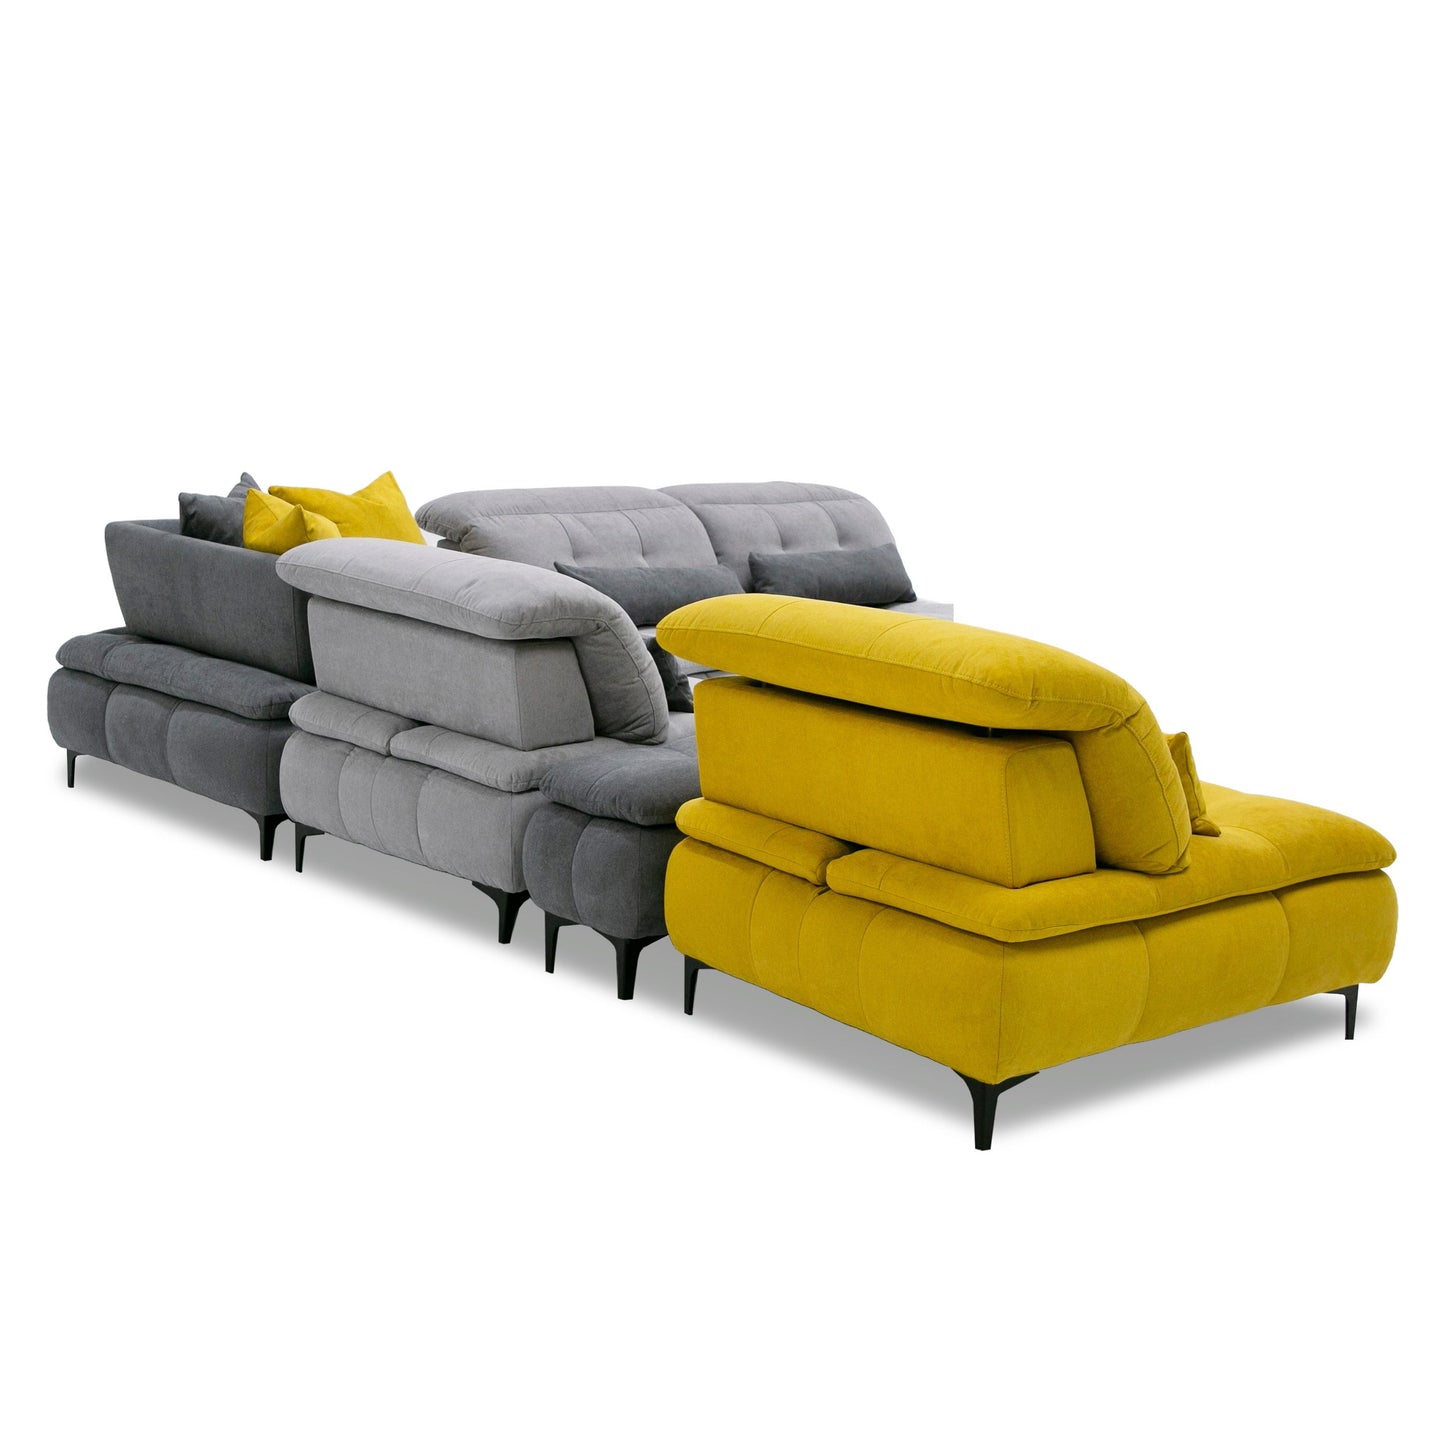 David Ferrari Mikado - Italian Modern Grey + Yellow Fabric Modular Sectional Sofa